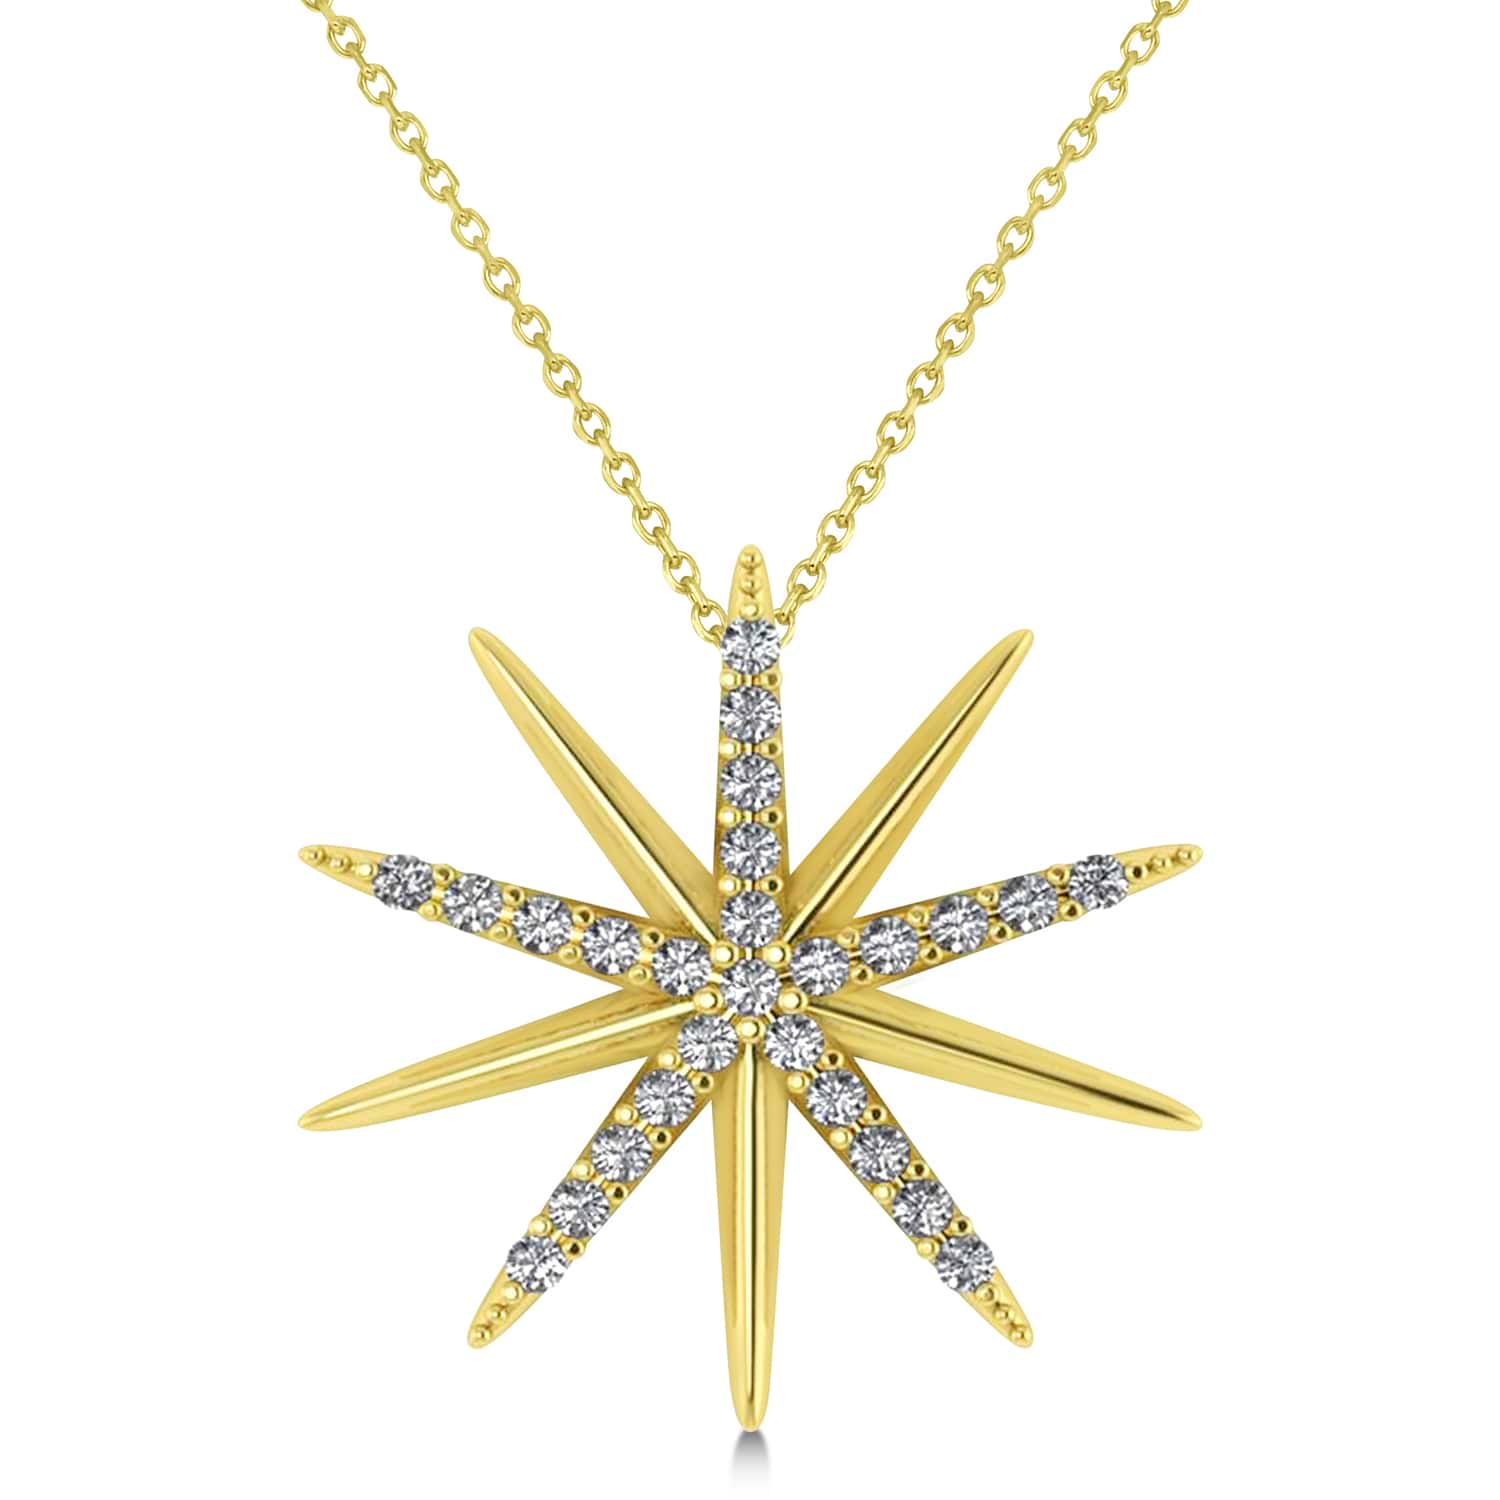 Diamond Starburst Pendant Necklace 14k Yellow Gold (0.13ct)